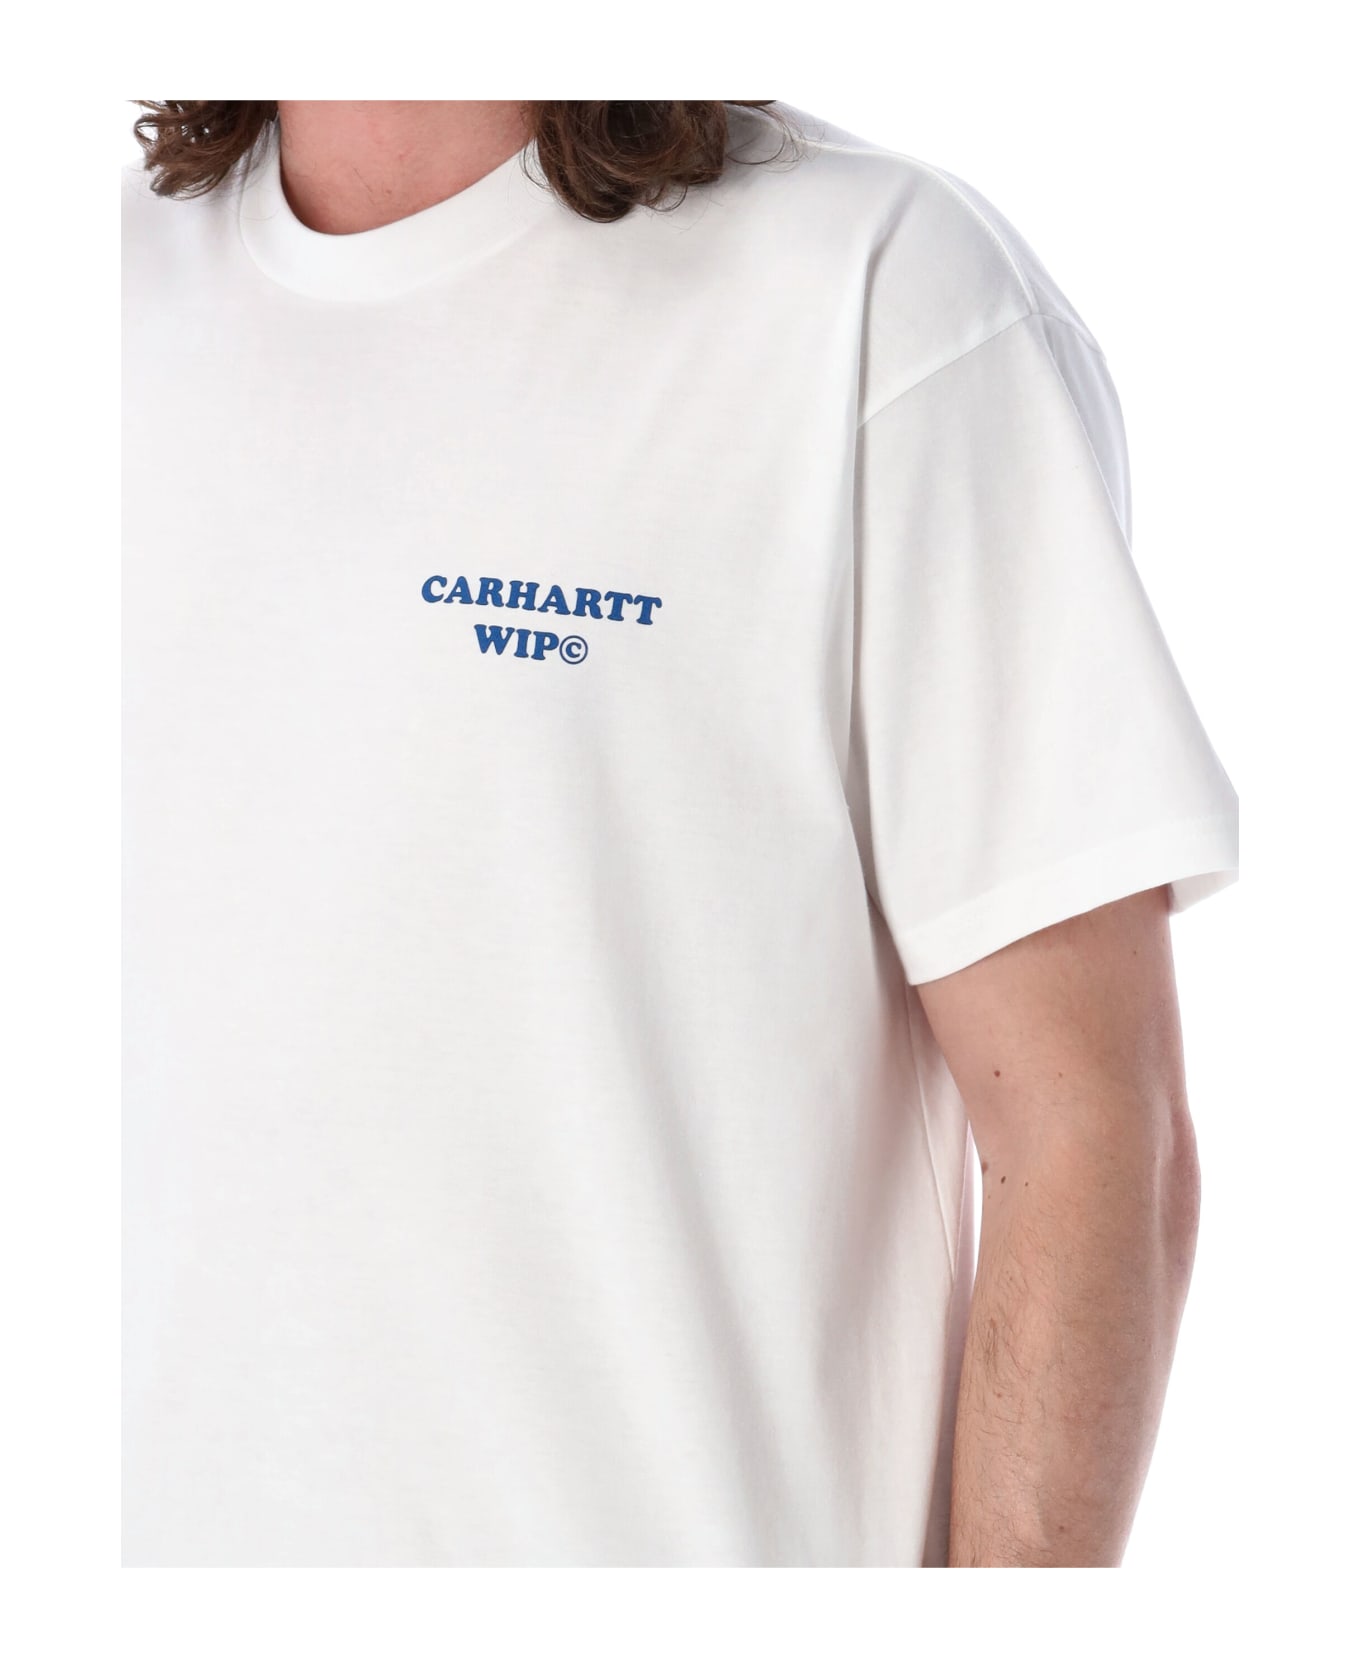 Carhartt Isis Maria Dinner T-shirt - WHITE シャツ